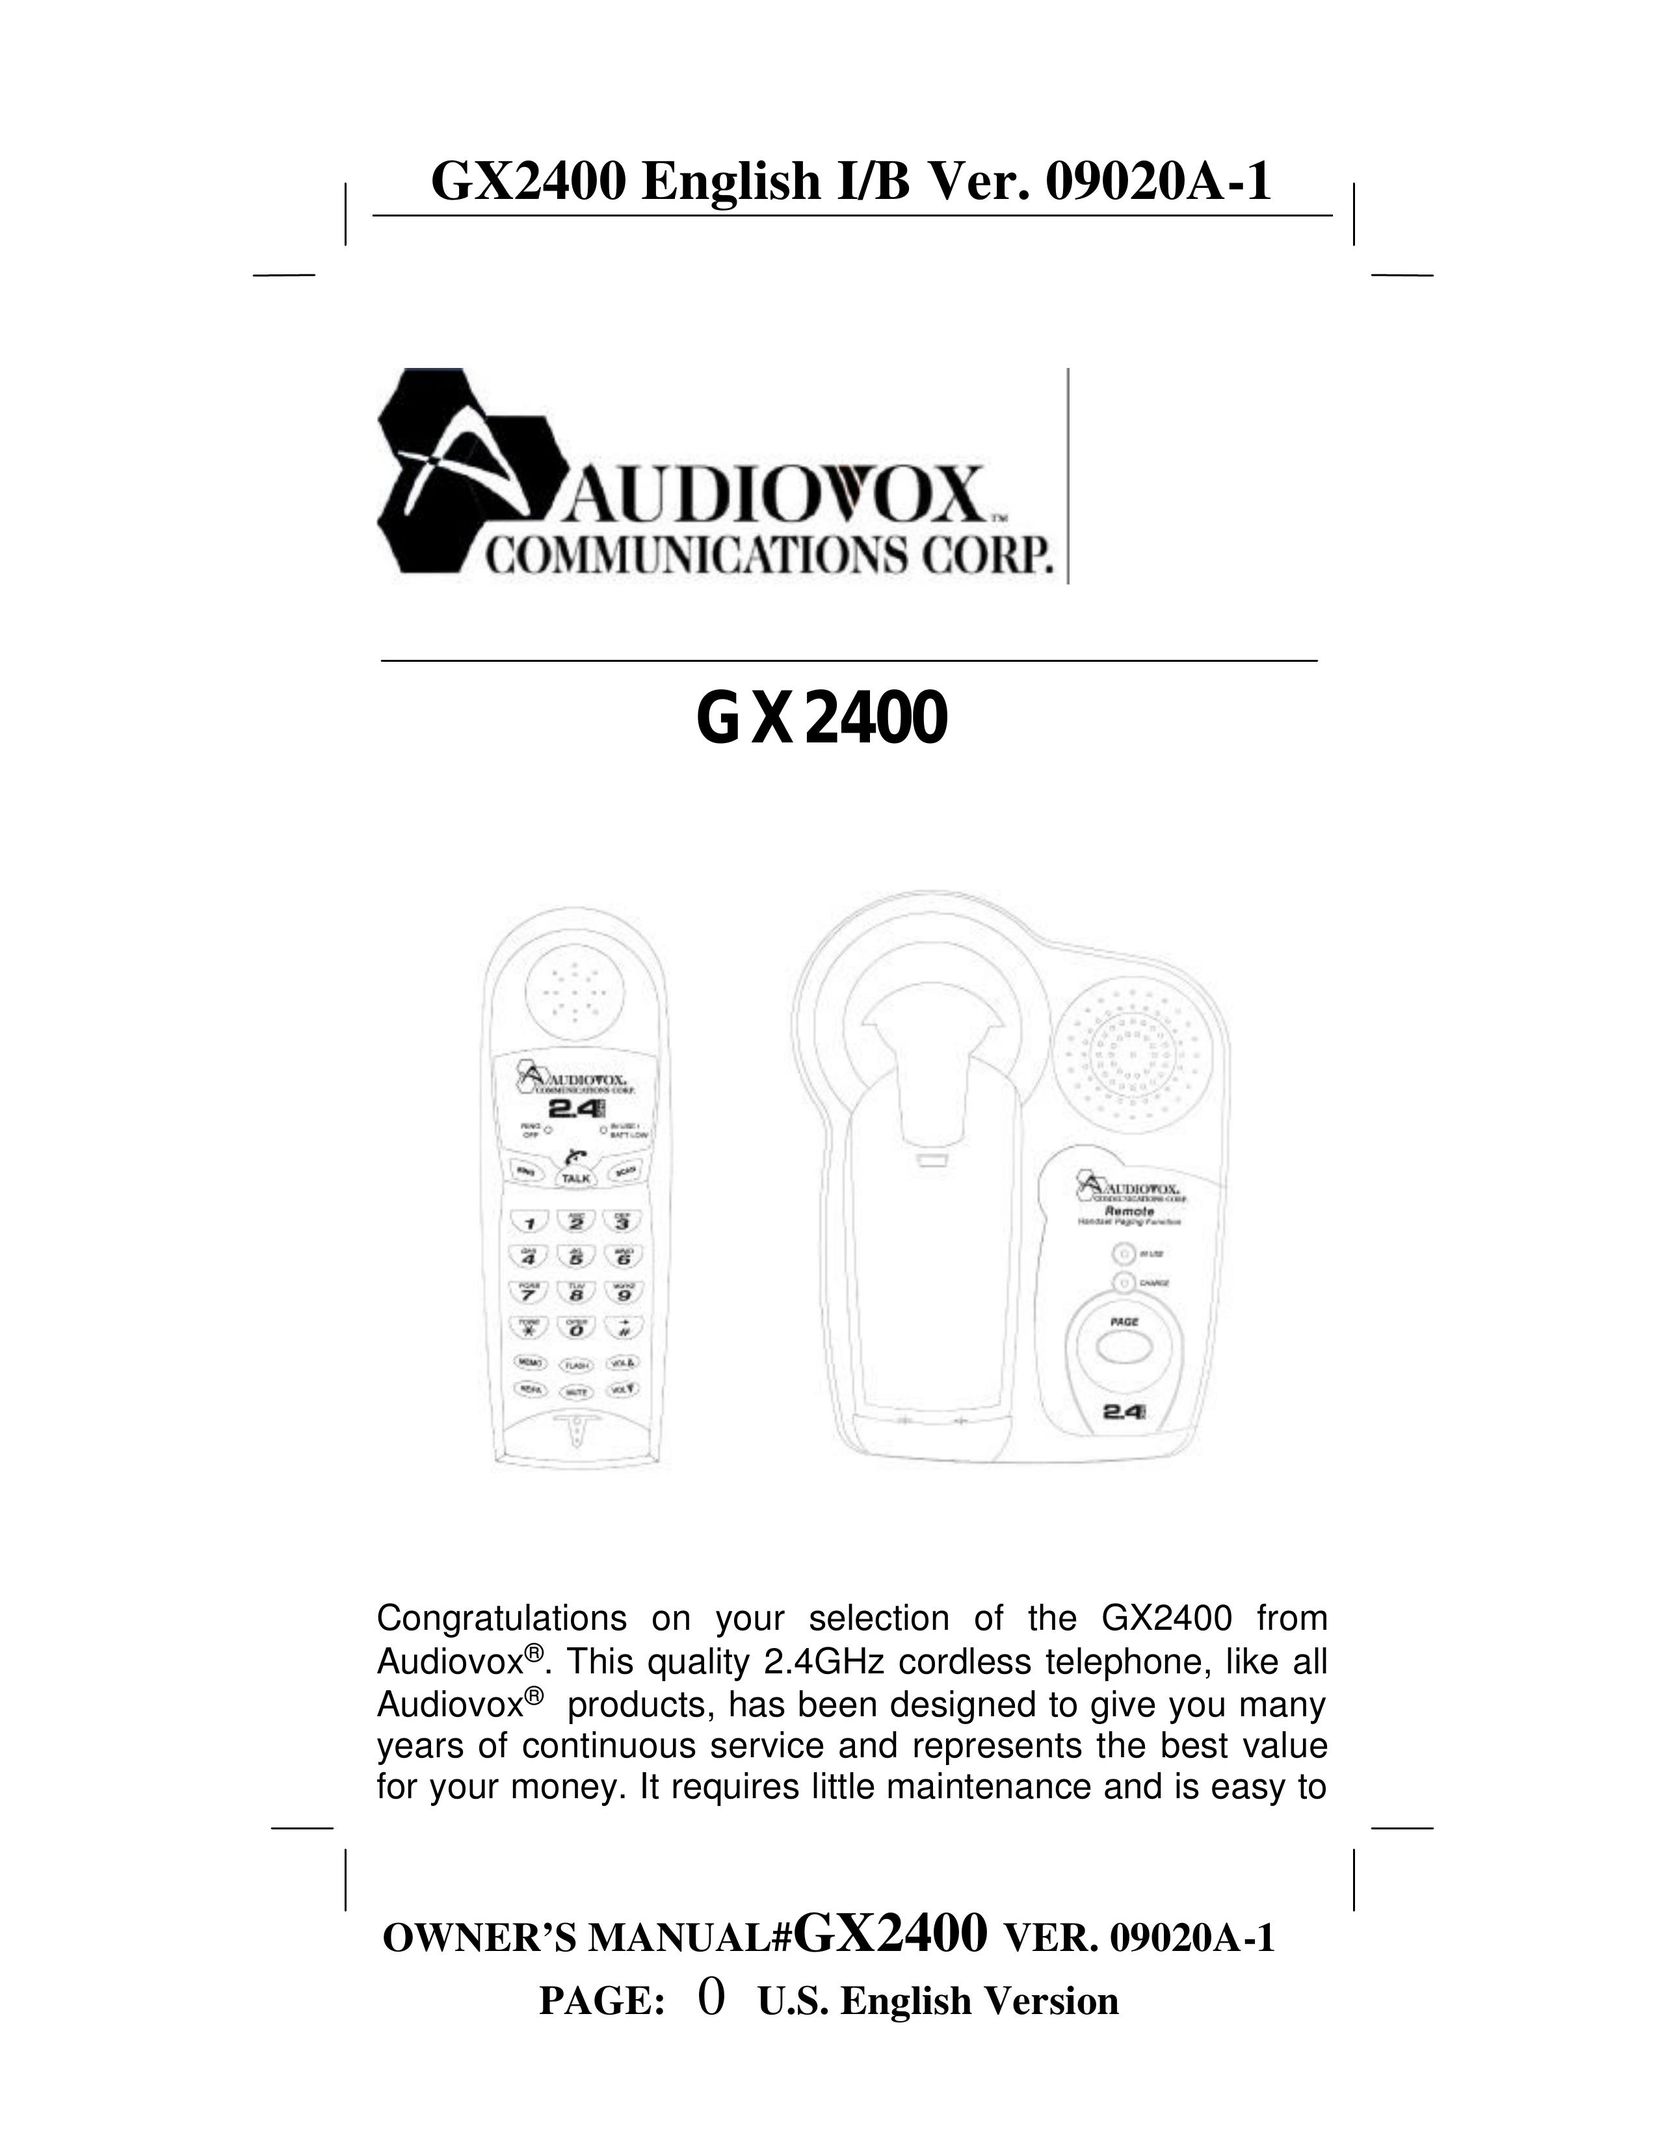 Audiovox gx2400 Cordless Telephone User Manual